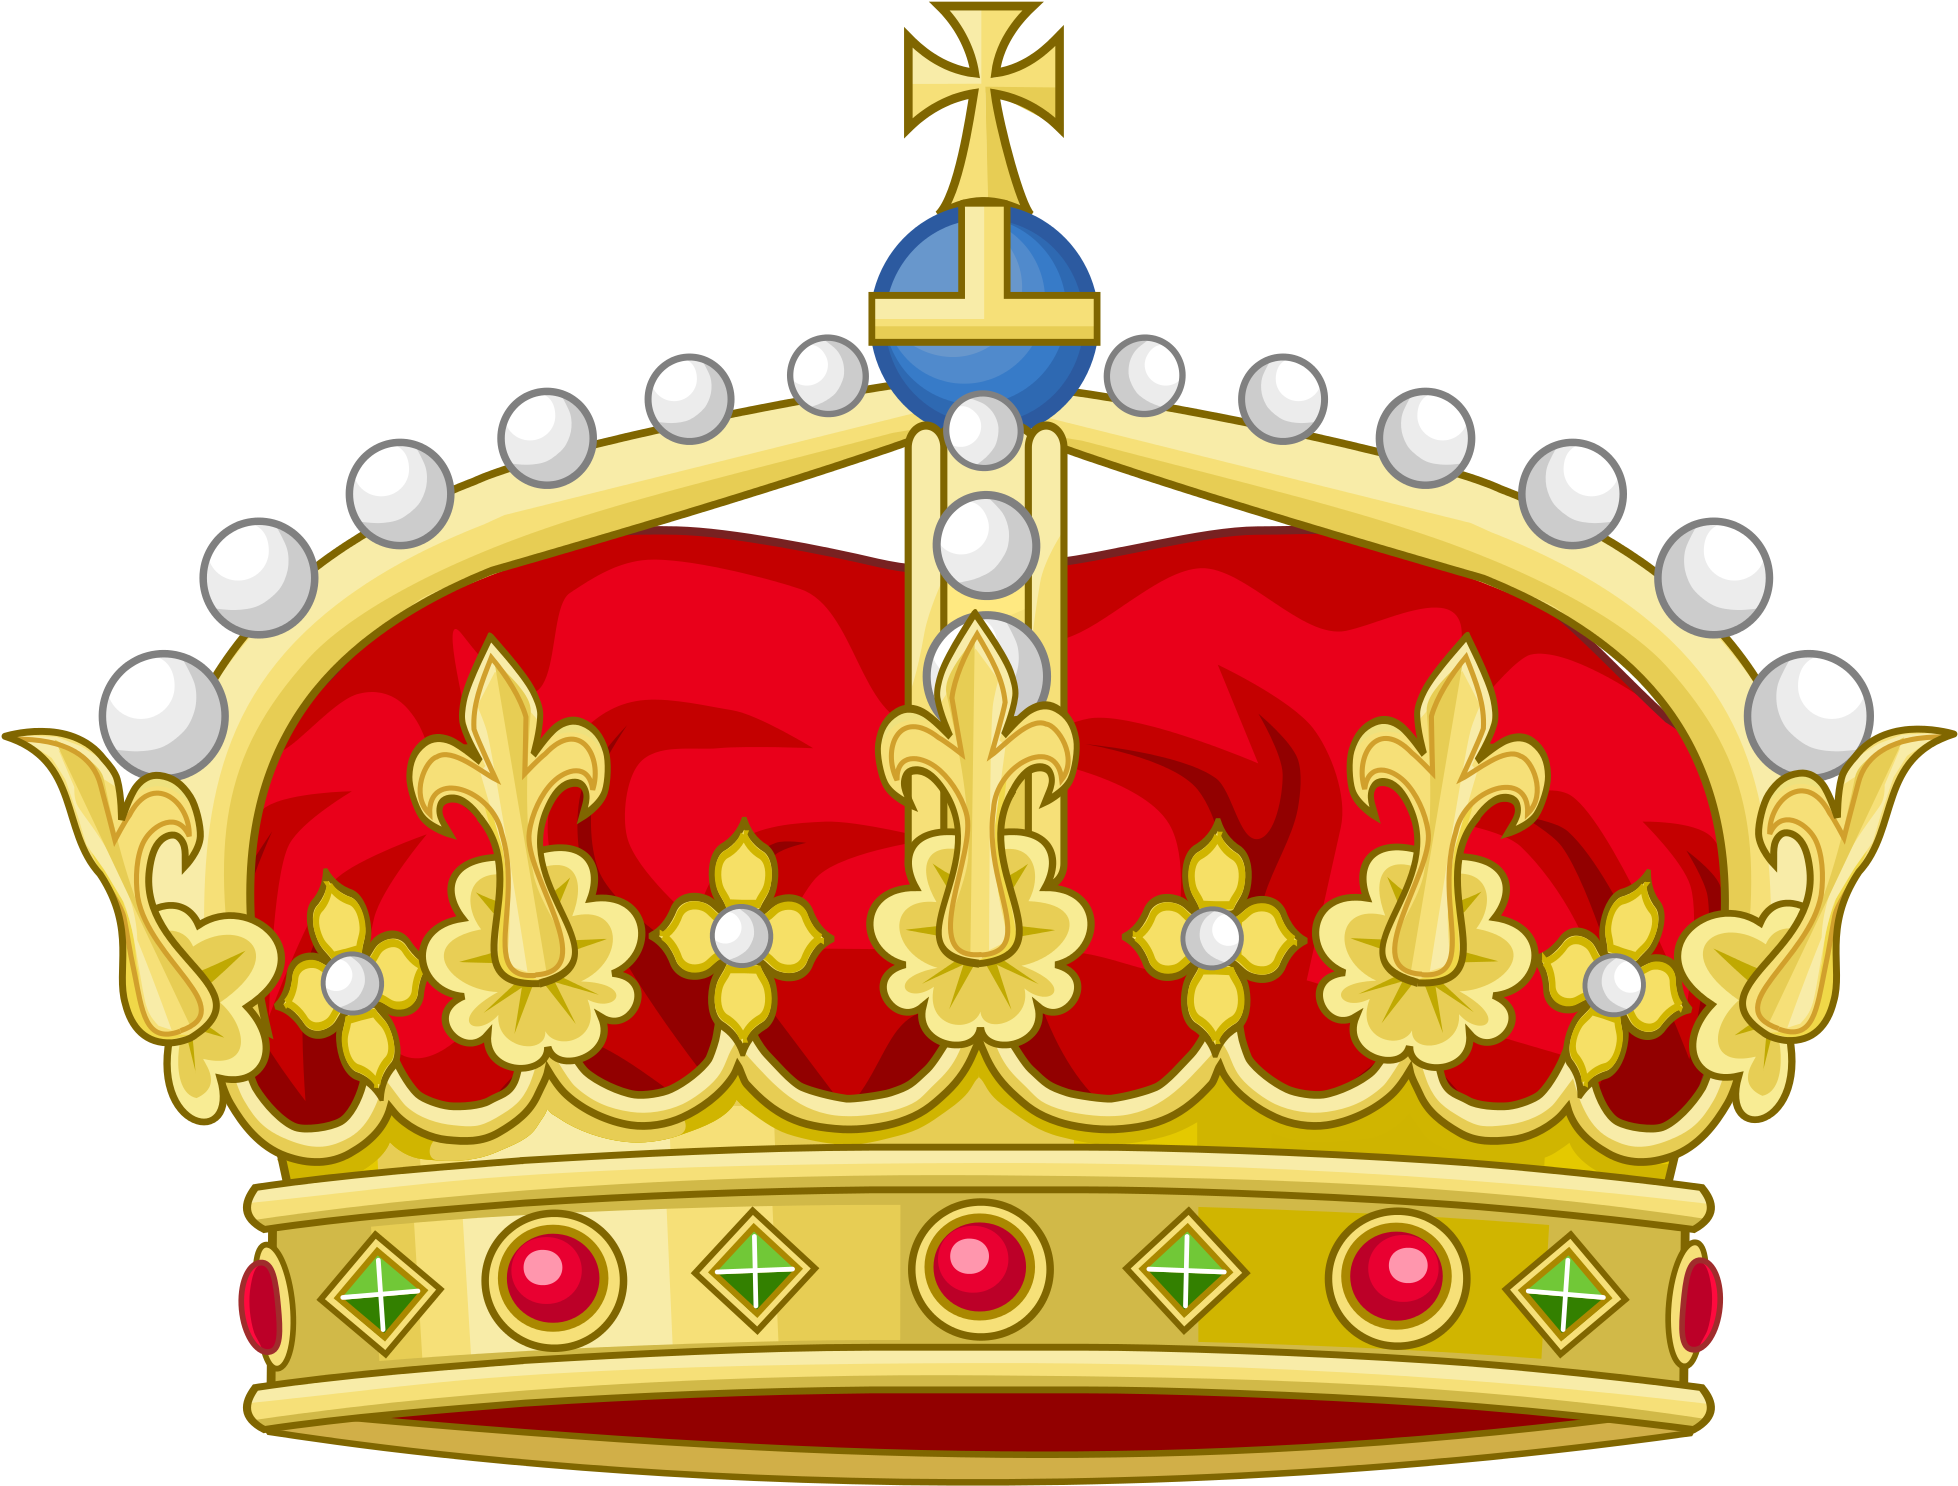 Open - Royal Crown Of Spain (2000x1502)